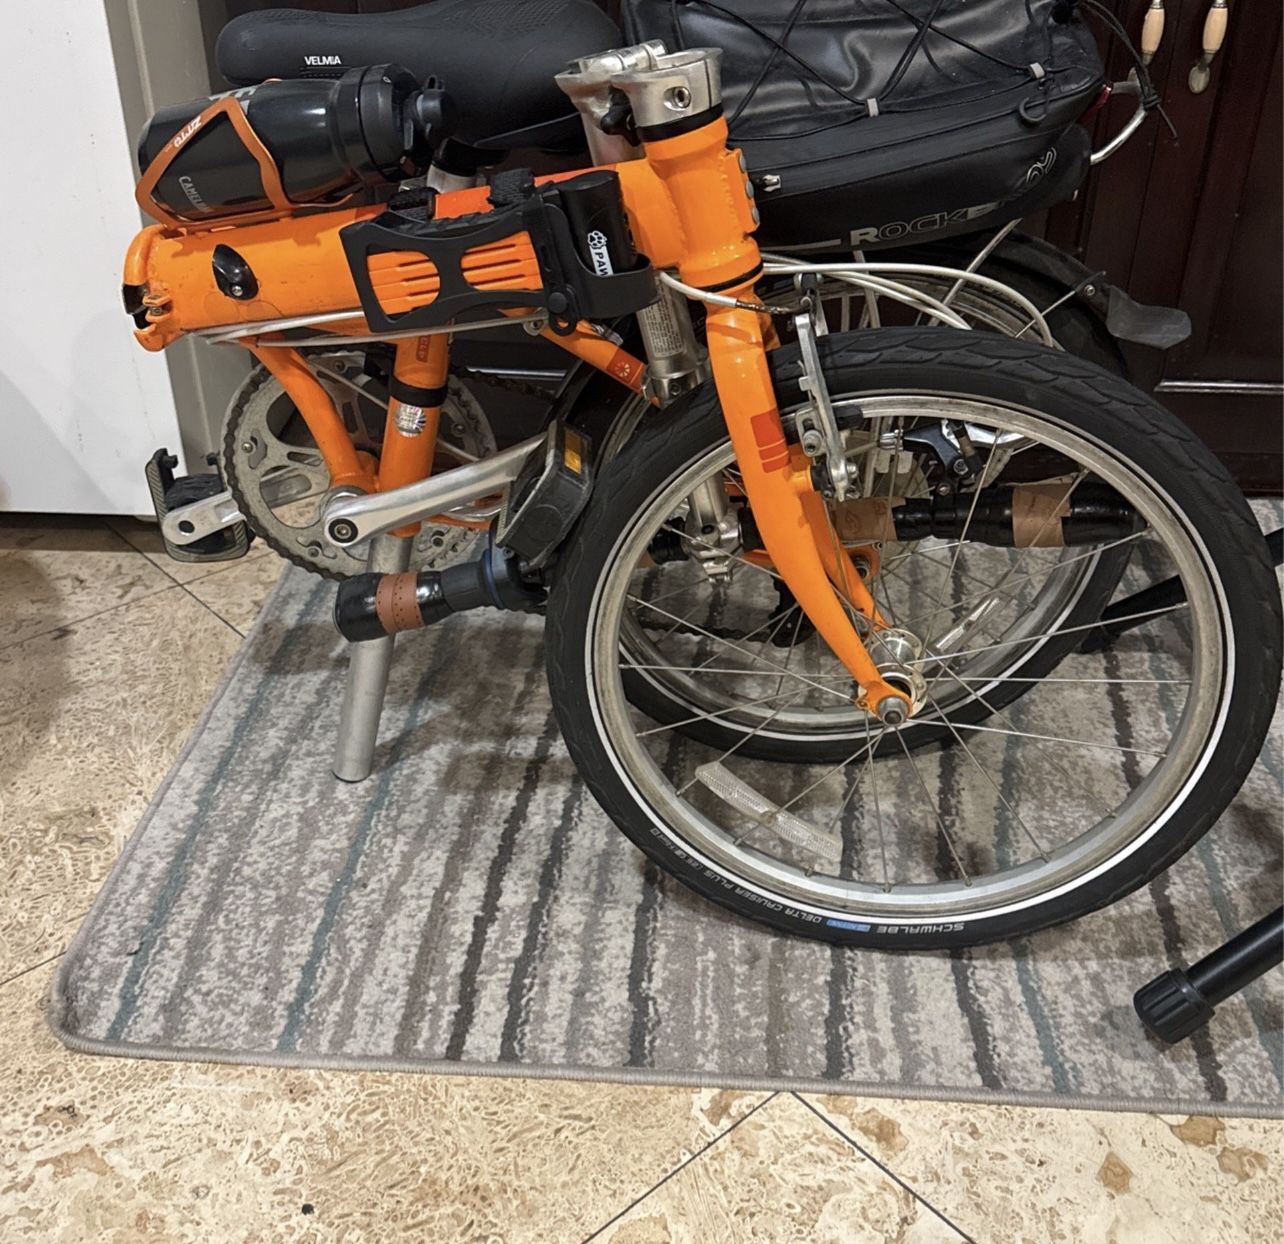 Dahon 7 Speed Folding Bike Comes With Rock Bros Bag Retail $100 & Zizzo Training Stand Retail $120